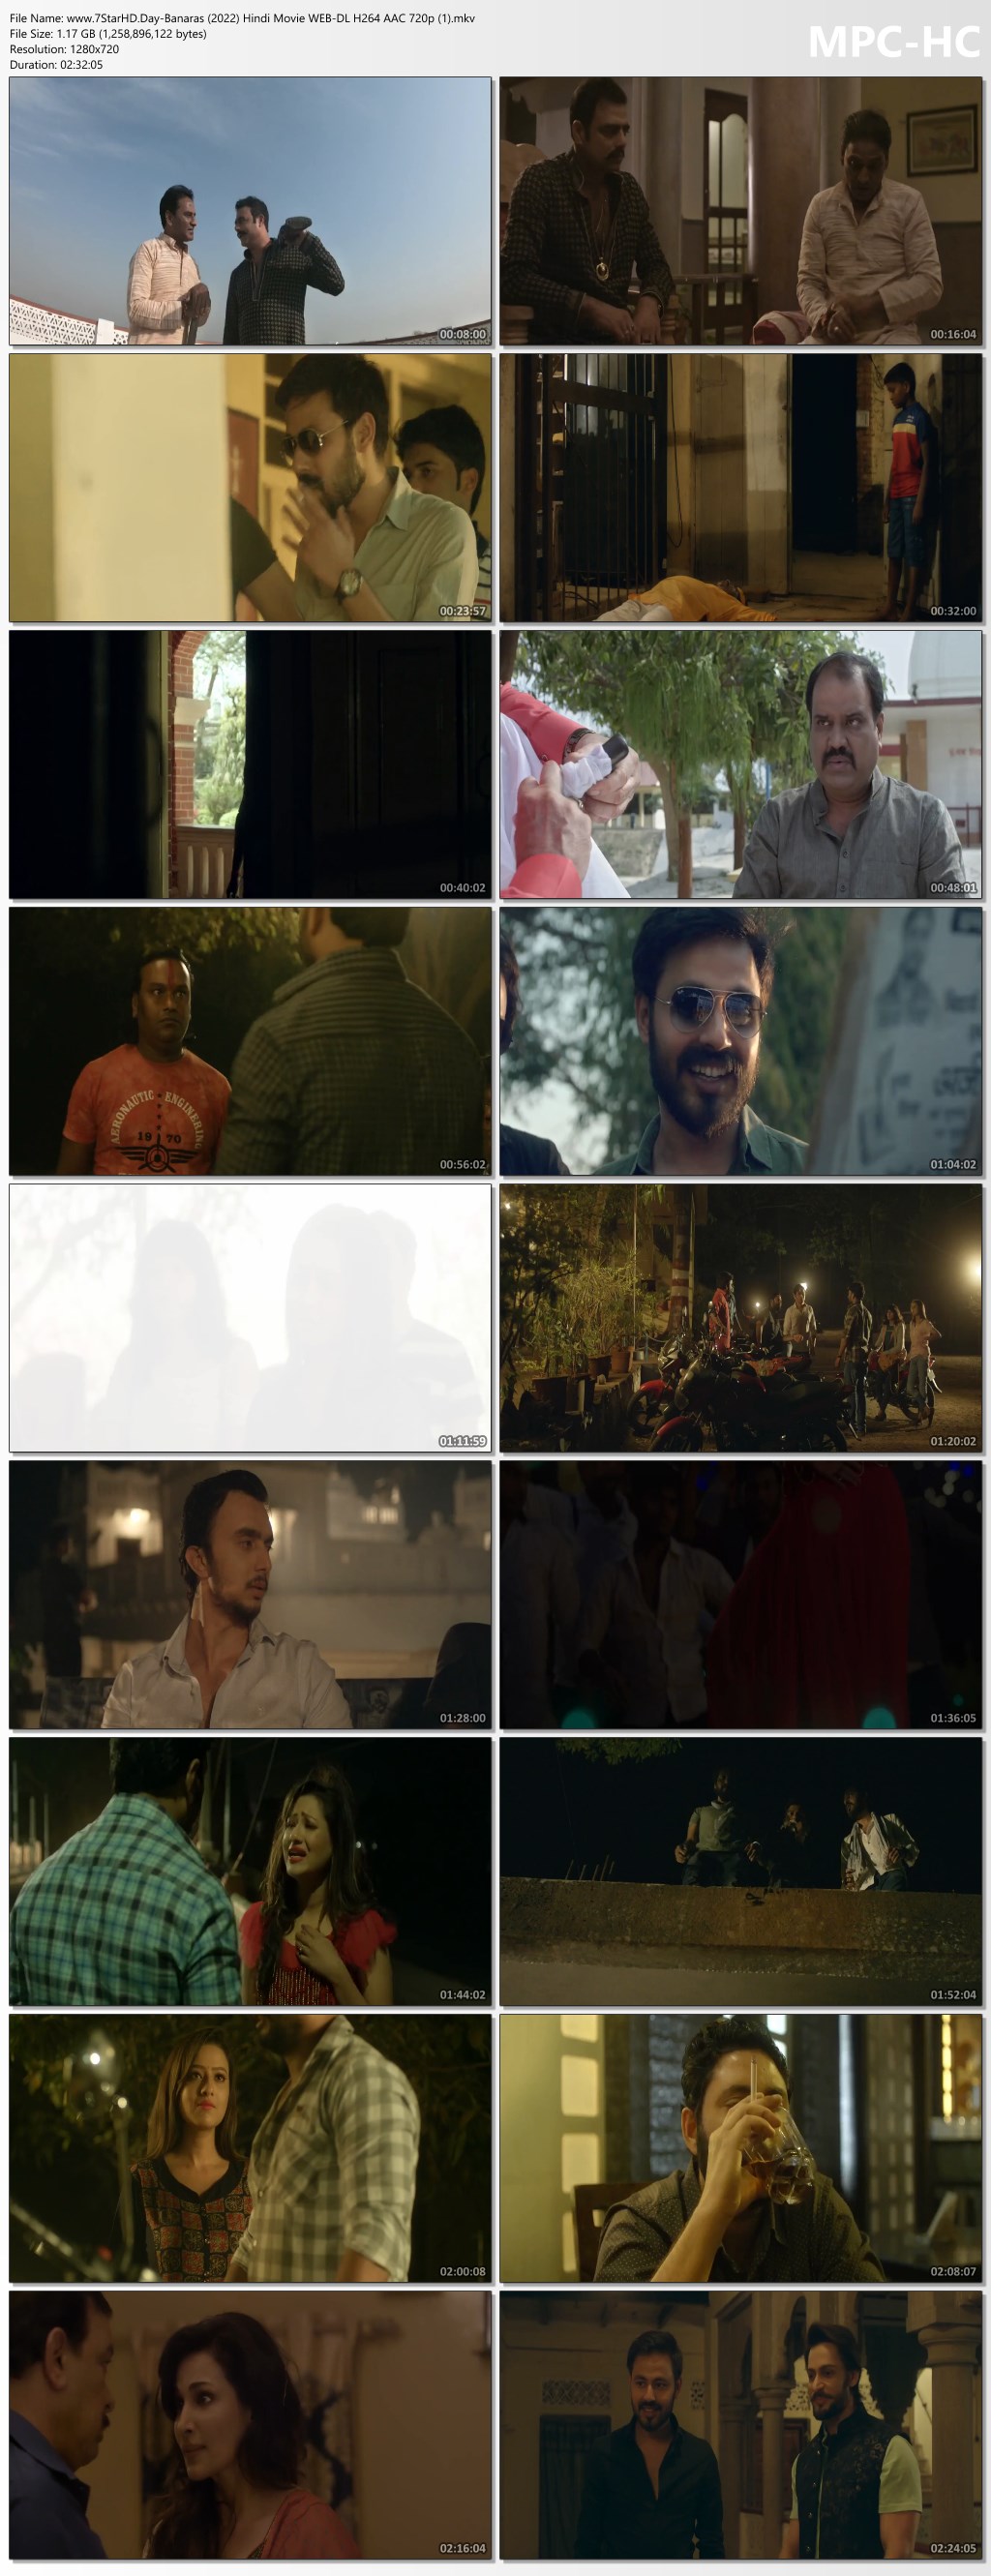 Banaras (2022) Hindi Movie 600MB WEB-DL 480p Download